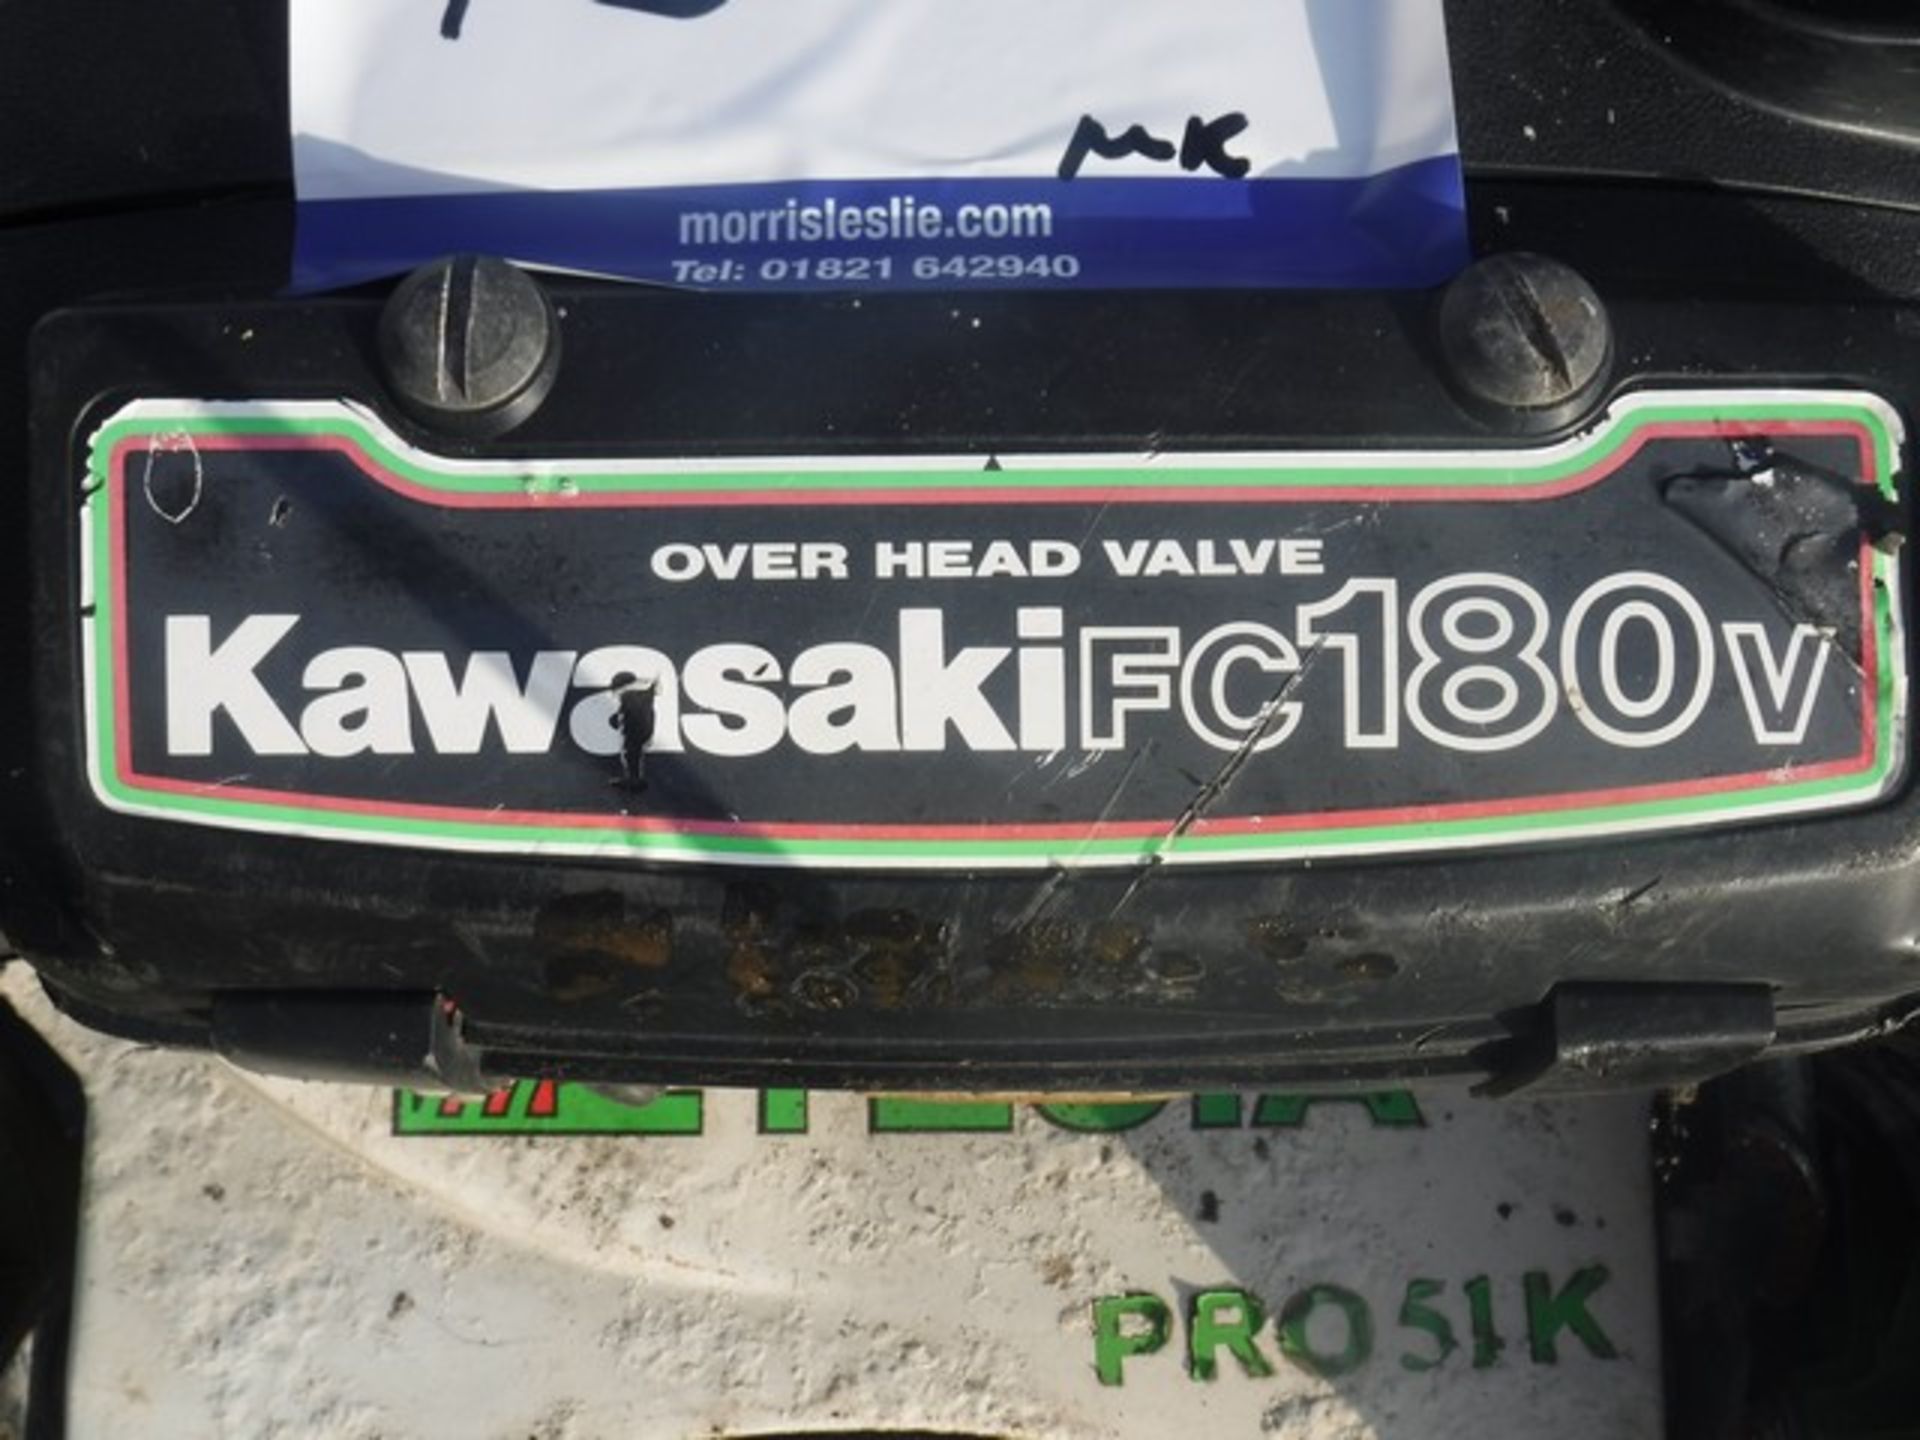 ETESIA MOWER KAWASAKI FC180V OVER HEAD VALVE ENGINE - Image 3 of 6